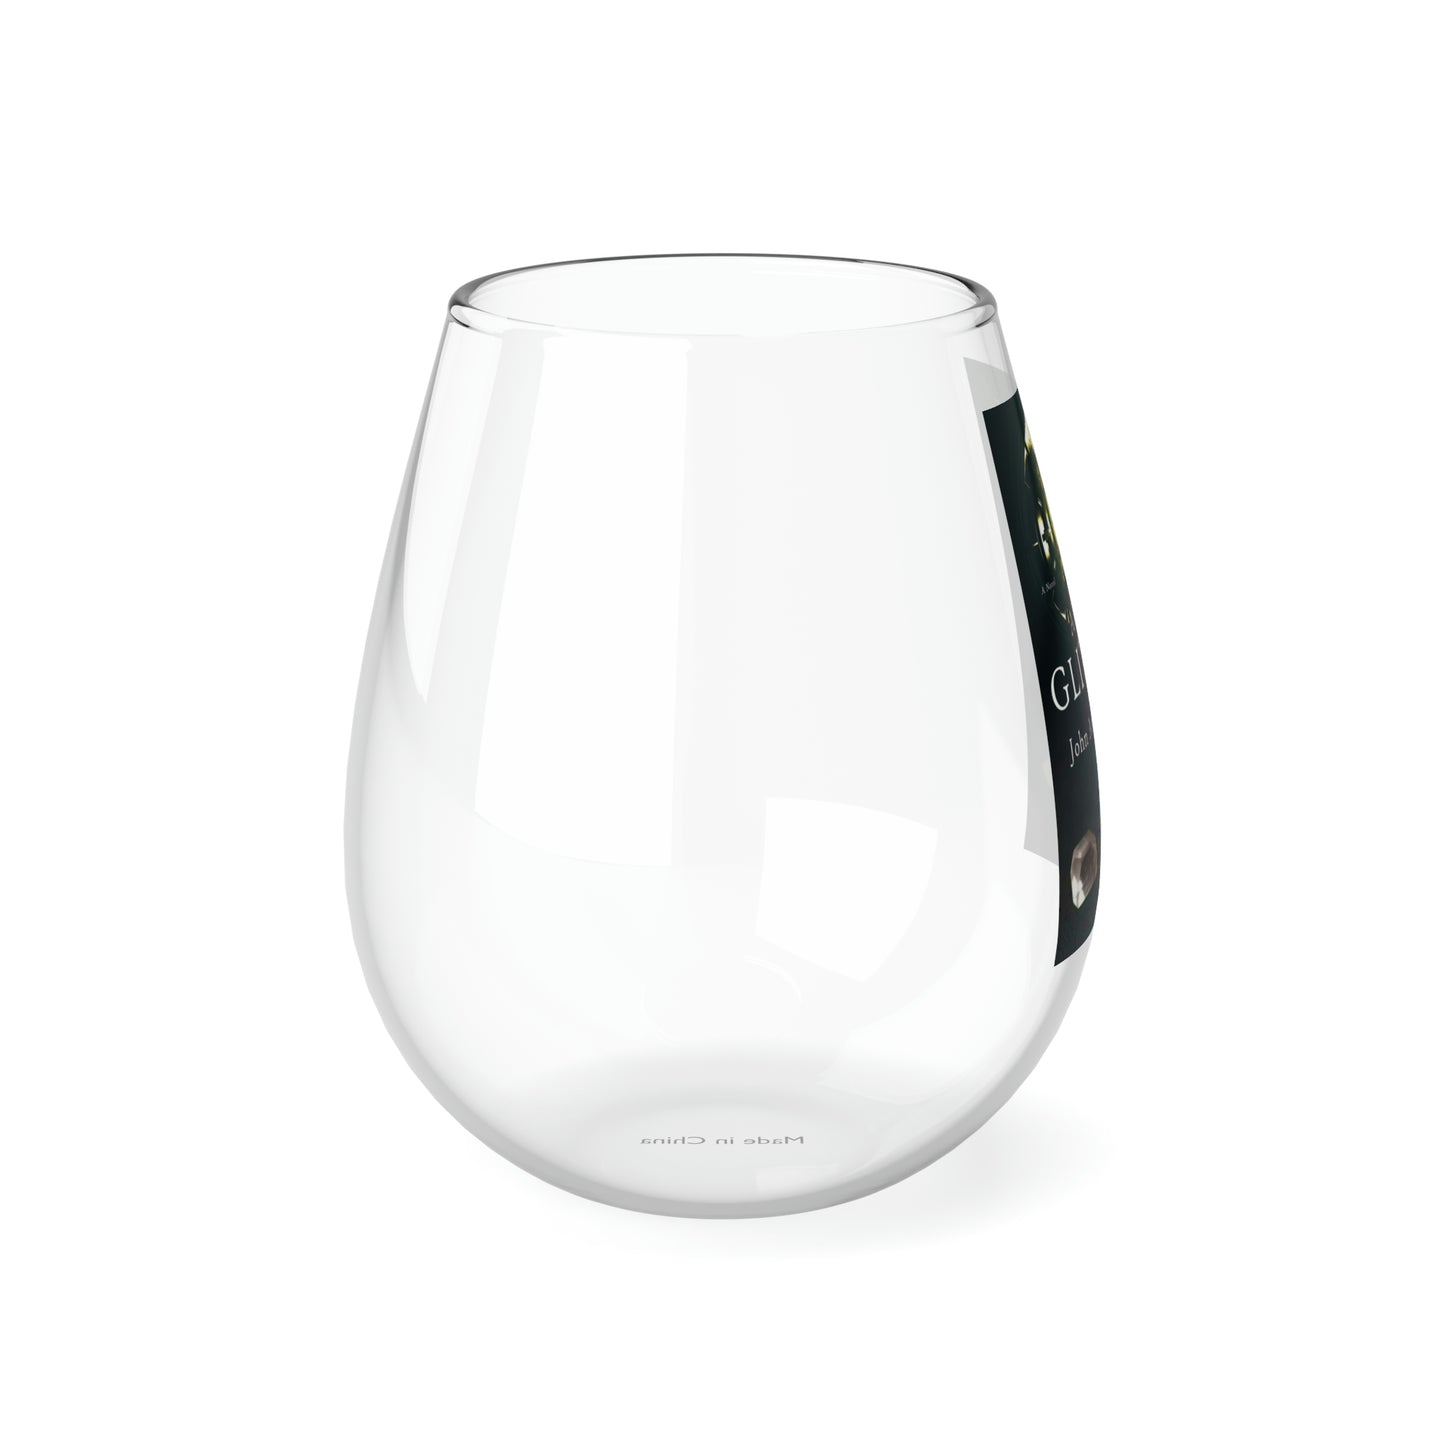 All That Glitters - Stemless Wine Glass, 11.75oz